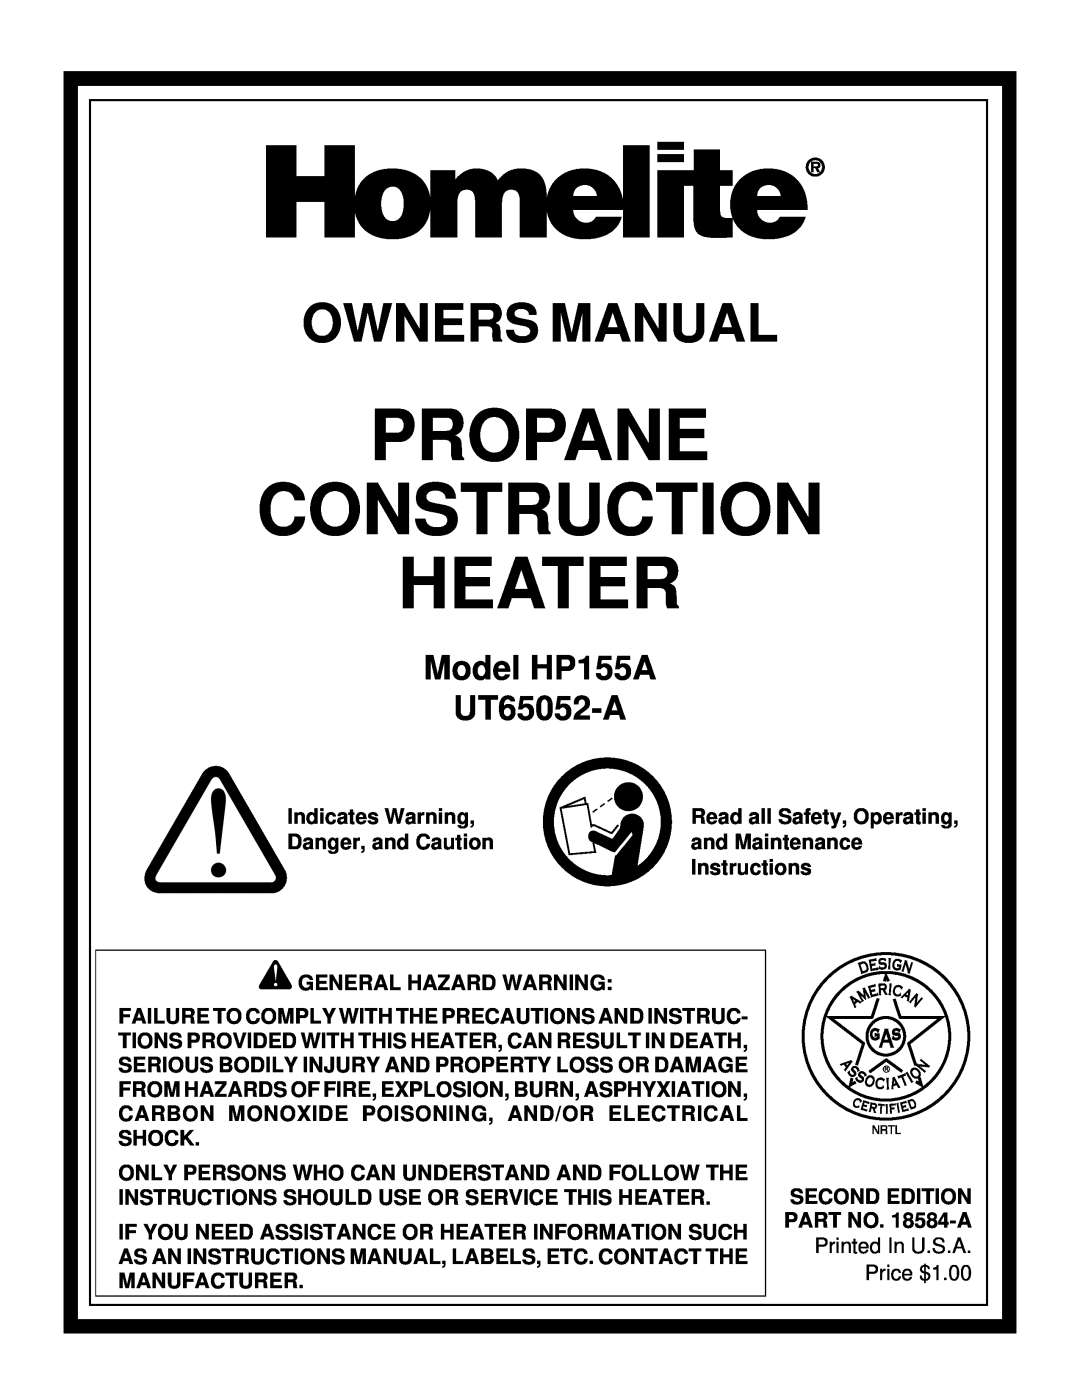 Homelite owner manual Propane Construction Heater, Model HP155A UT65052-A 